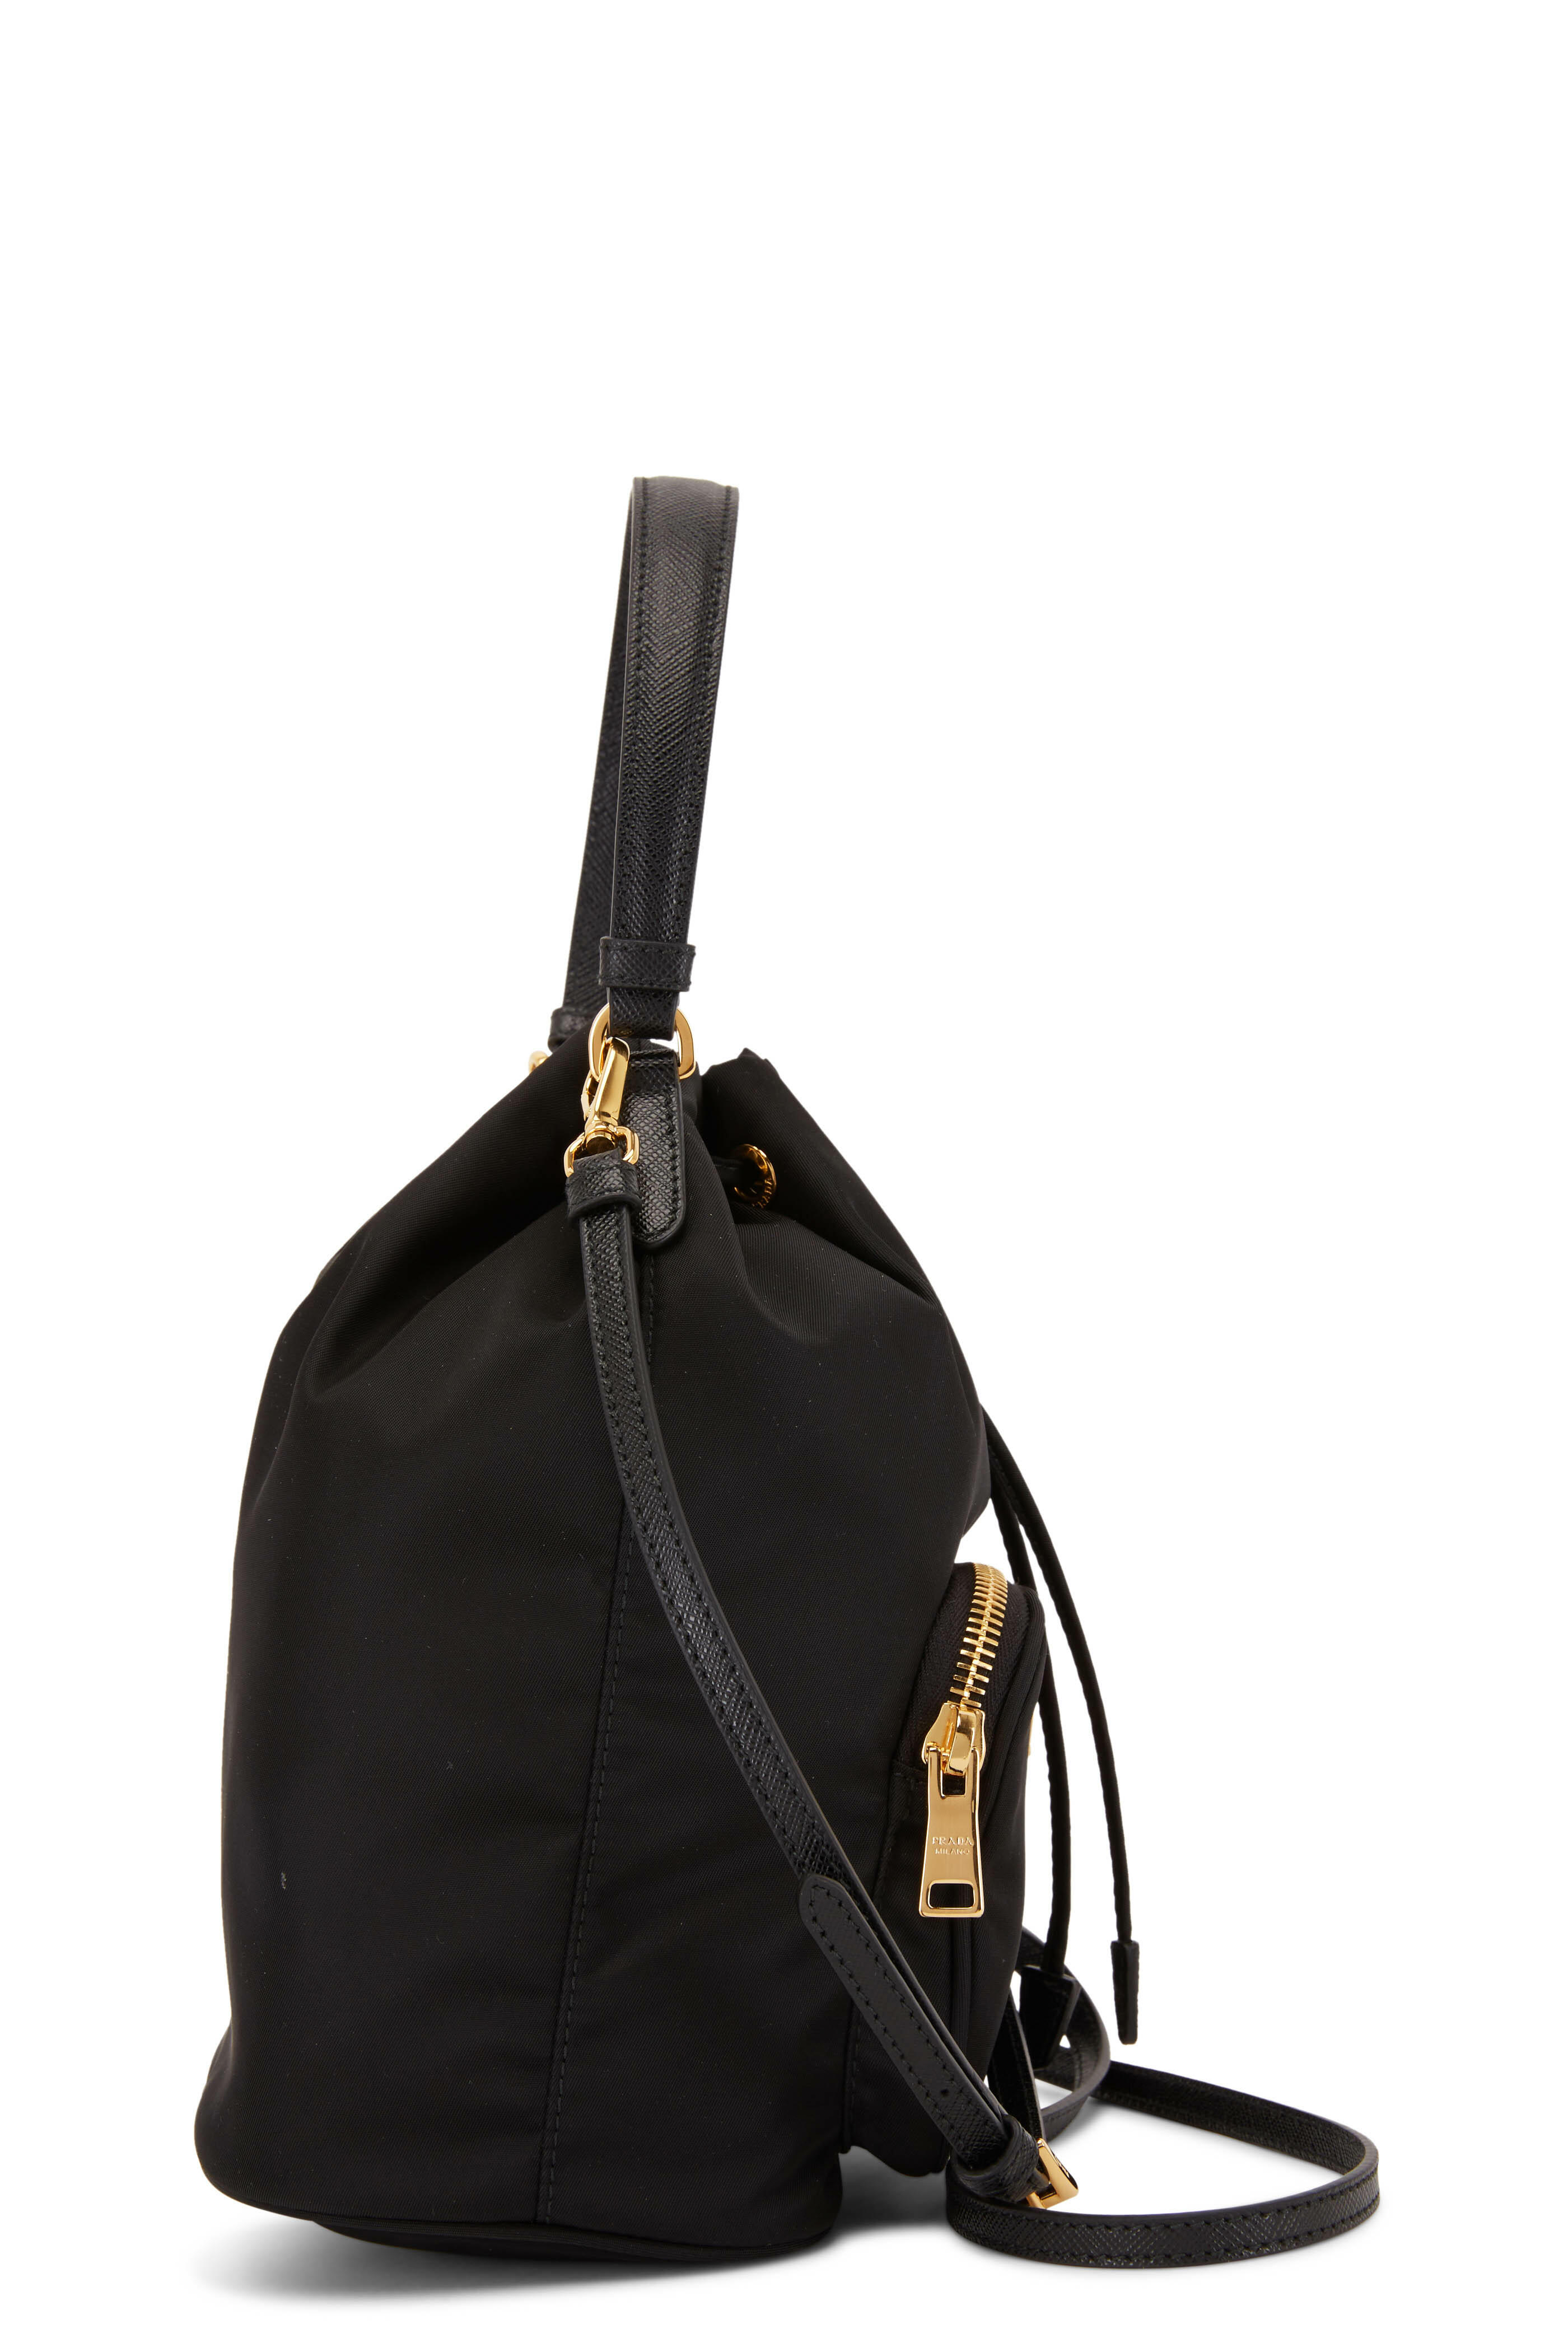 Prada Tessuto Nylon Shoulder Bucket Bag Black